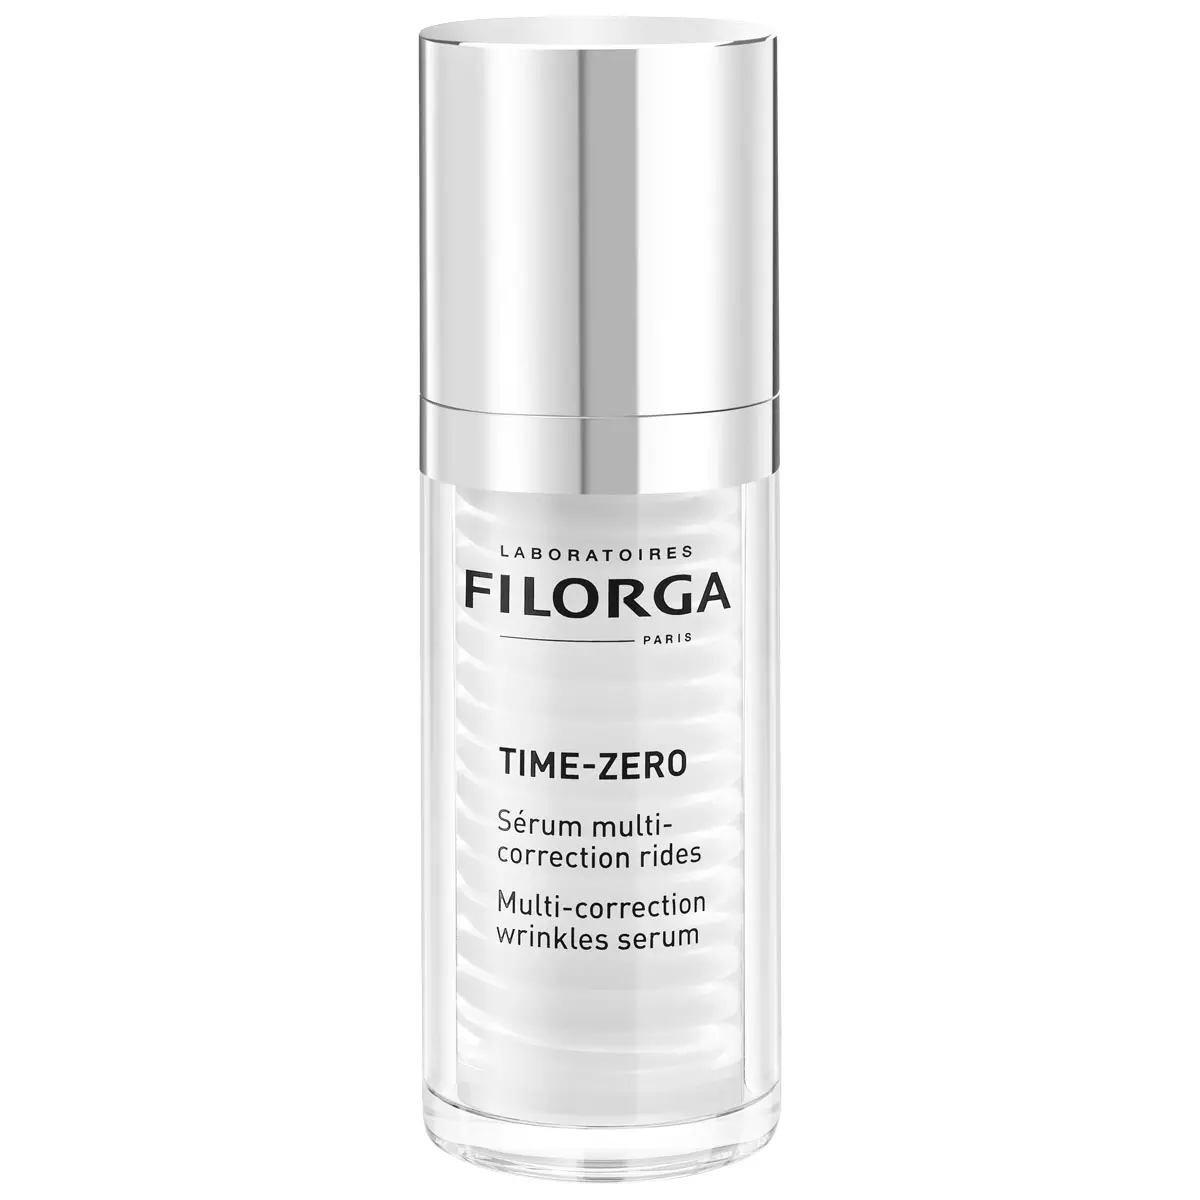 Filorga Time-Zero Multi-Correction Wrinkles Serum - Сыворотка-мультикорректор, 30 мл.